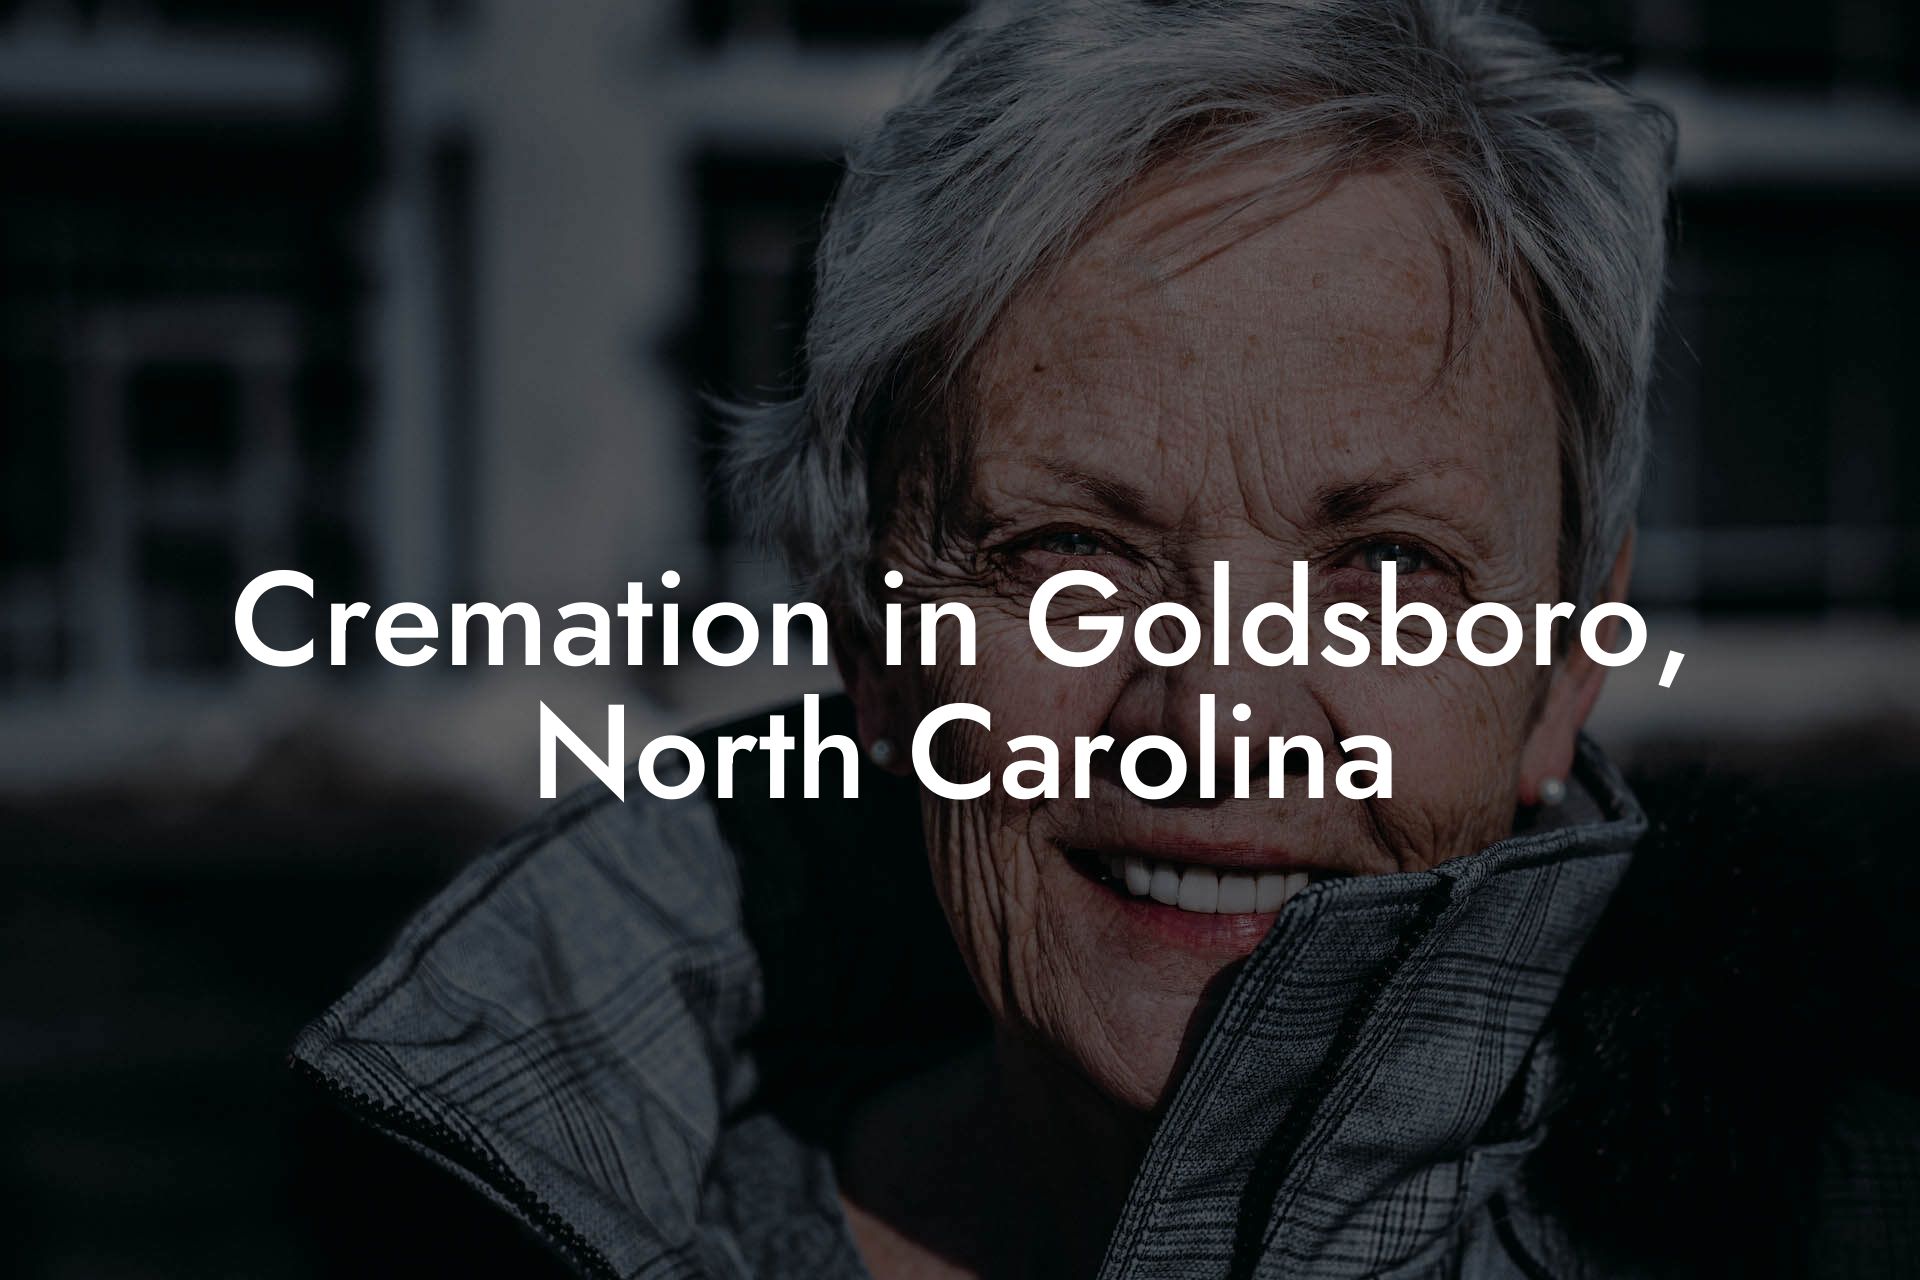 Cremation in Goldsboro, North Carolina